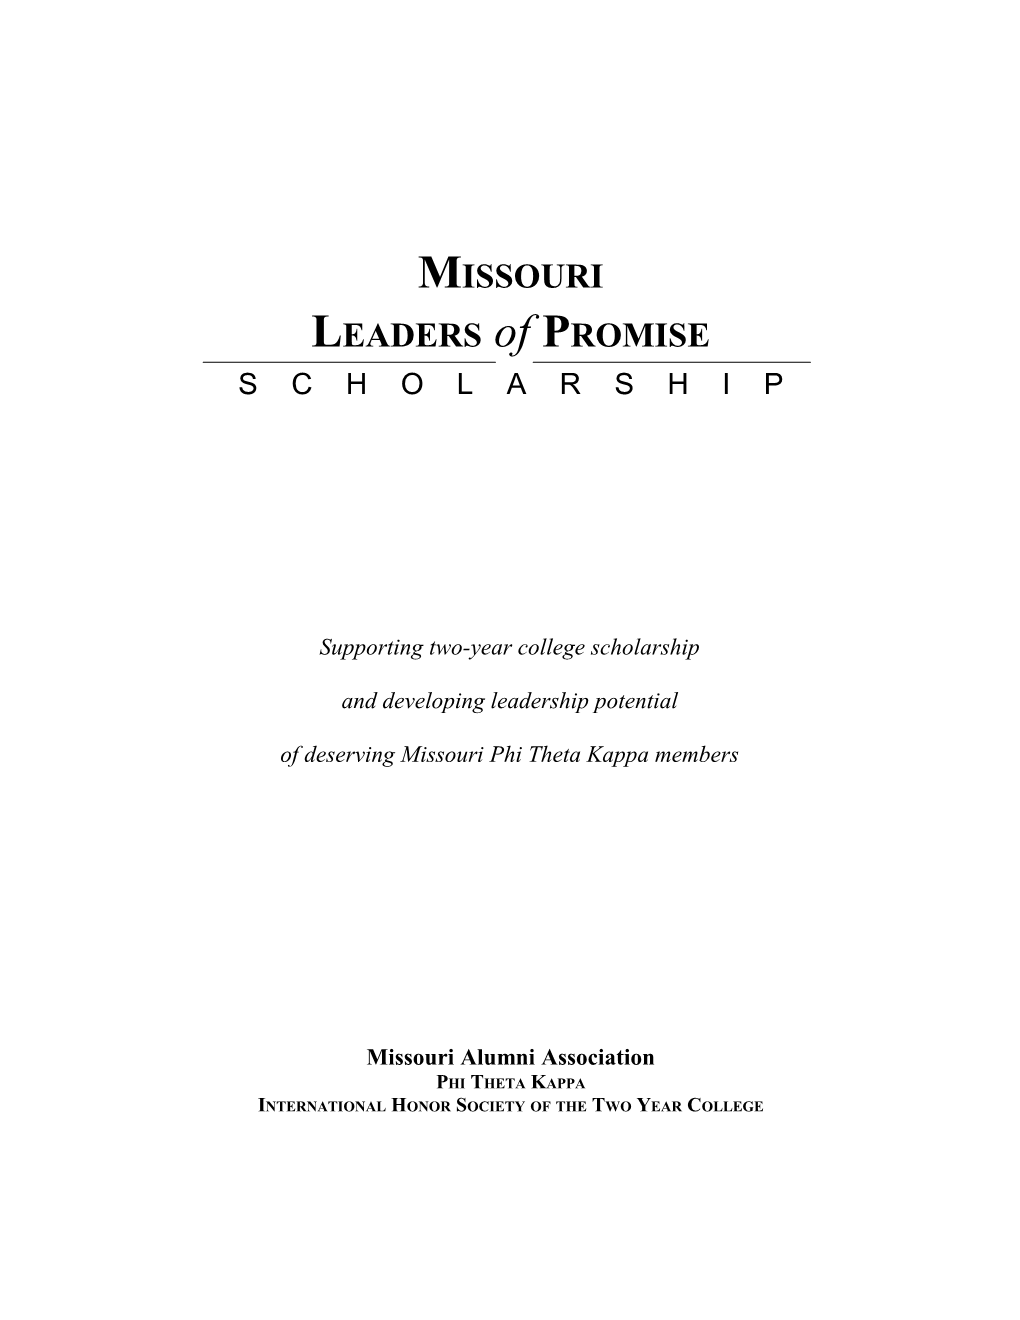 Missouri Leaders of Promise Scholarship